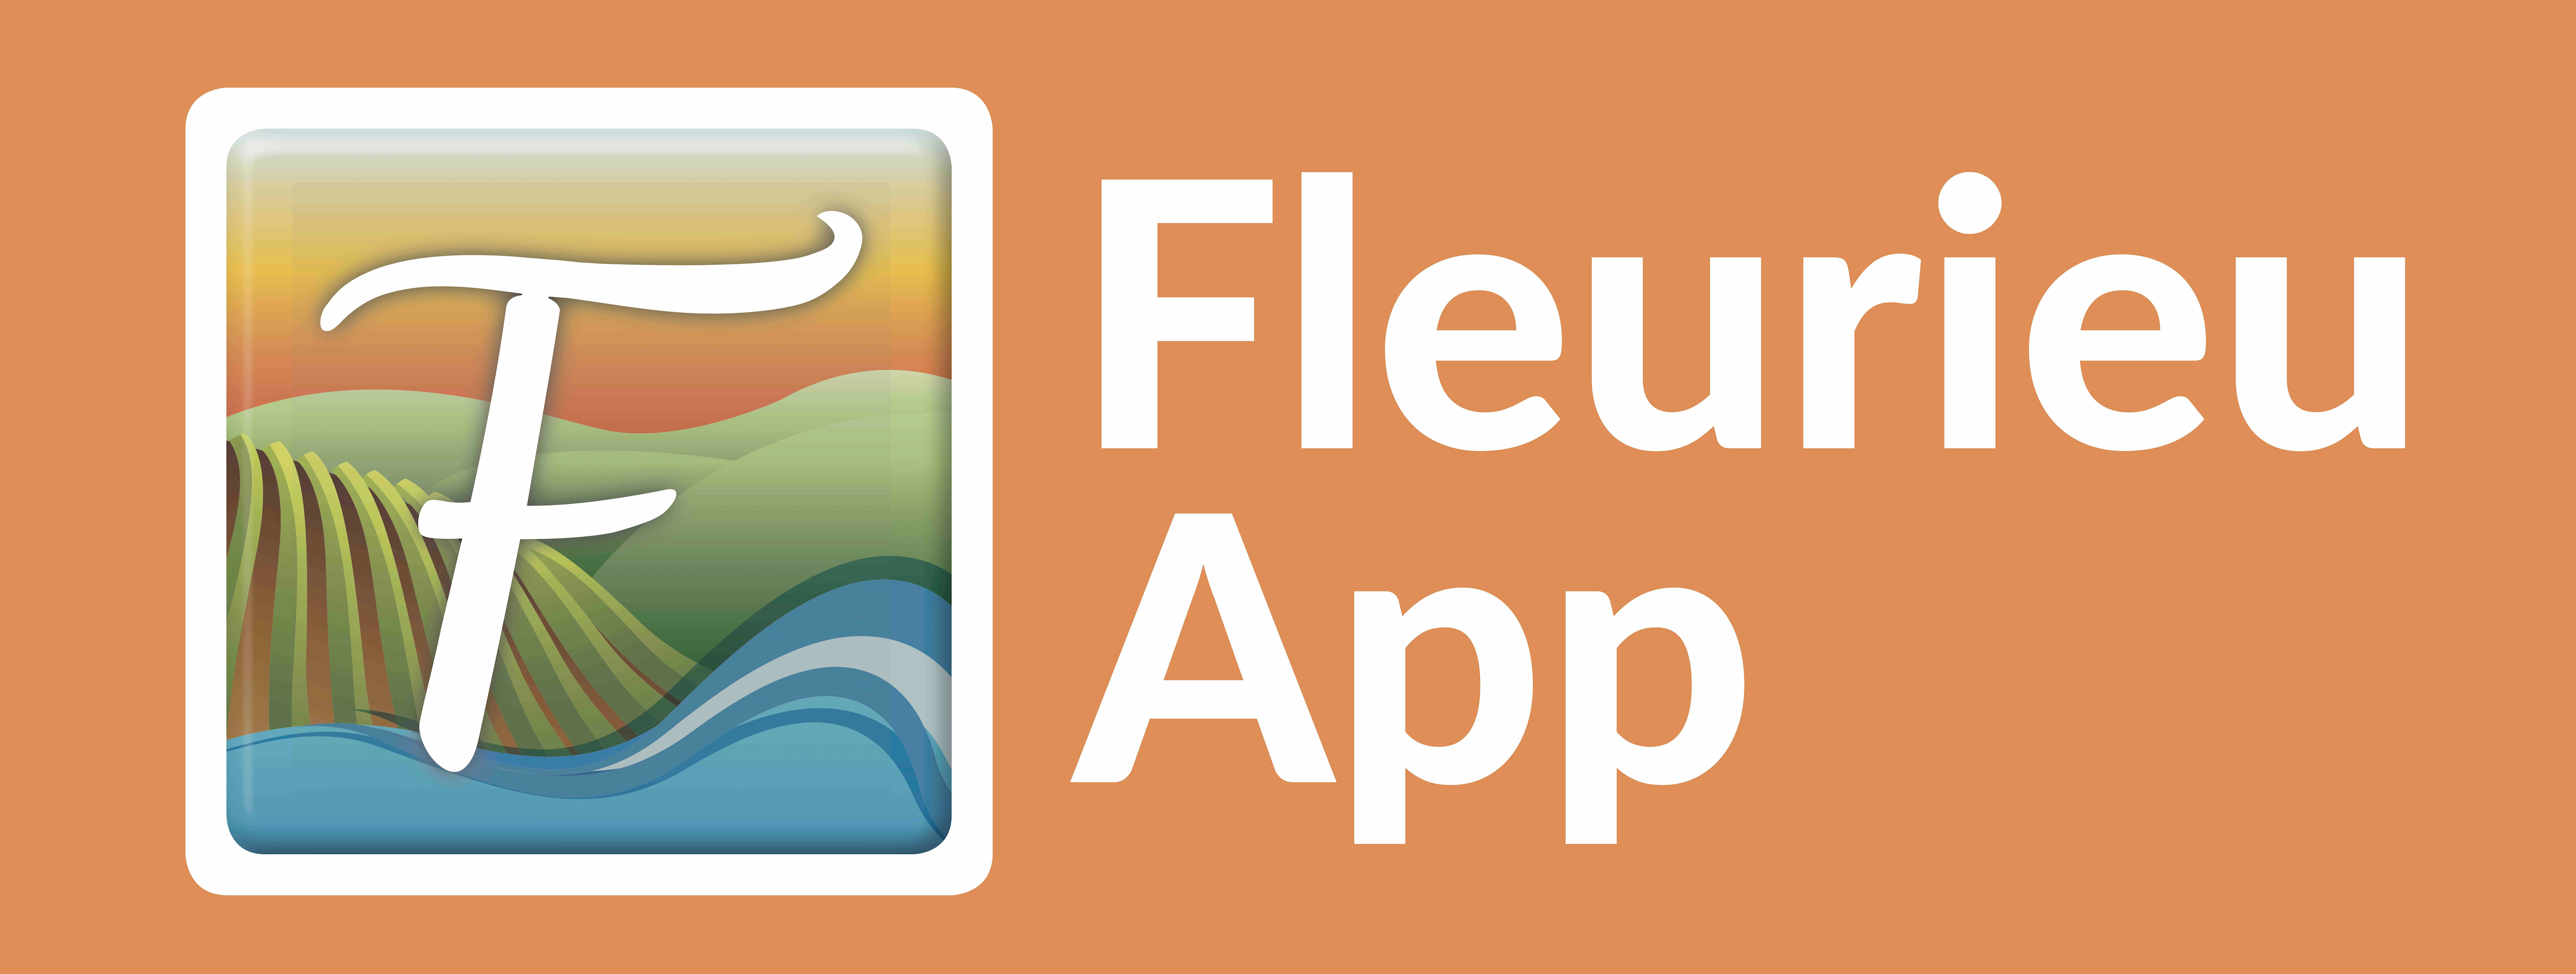 Fleurieu App